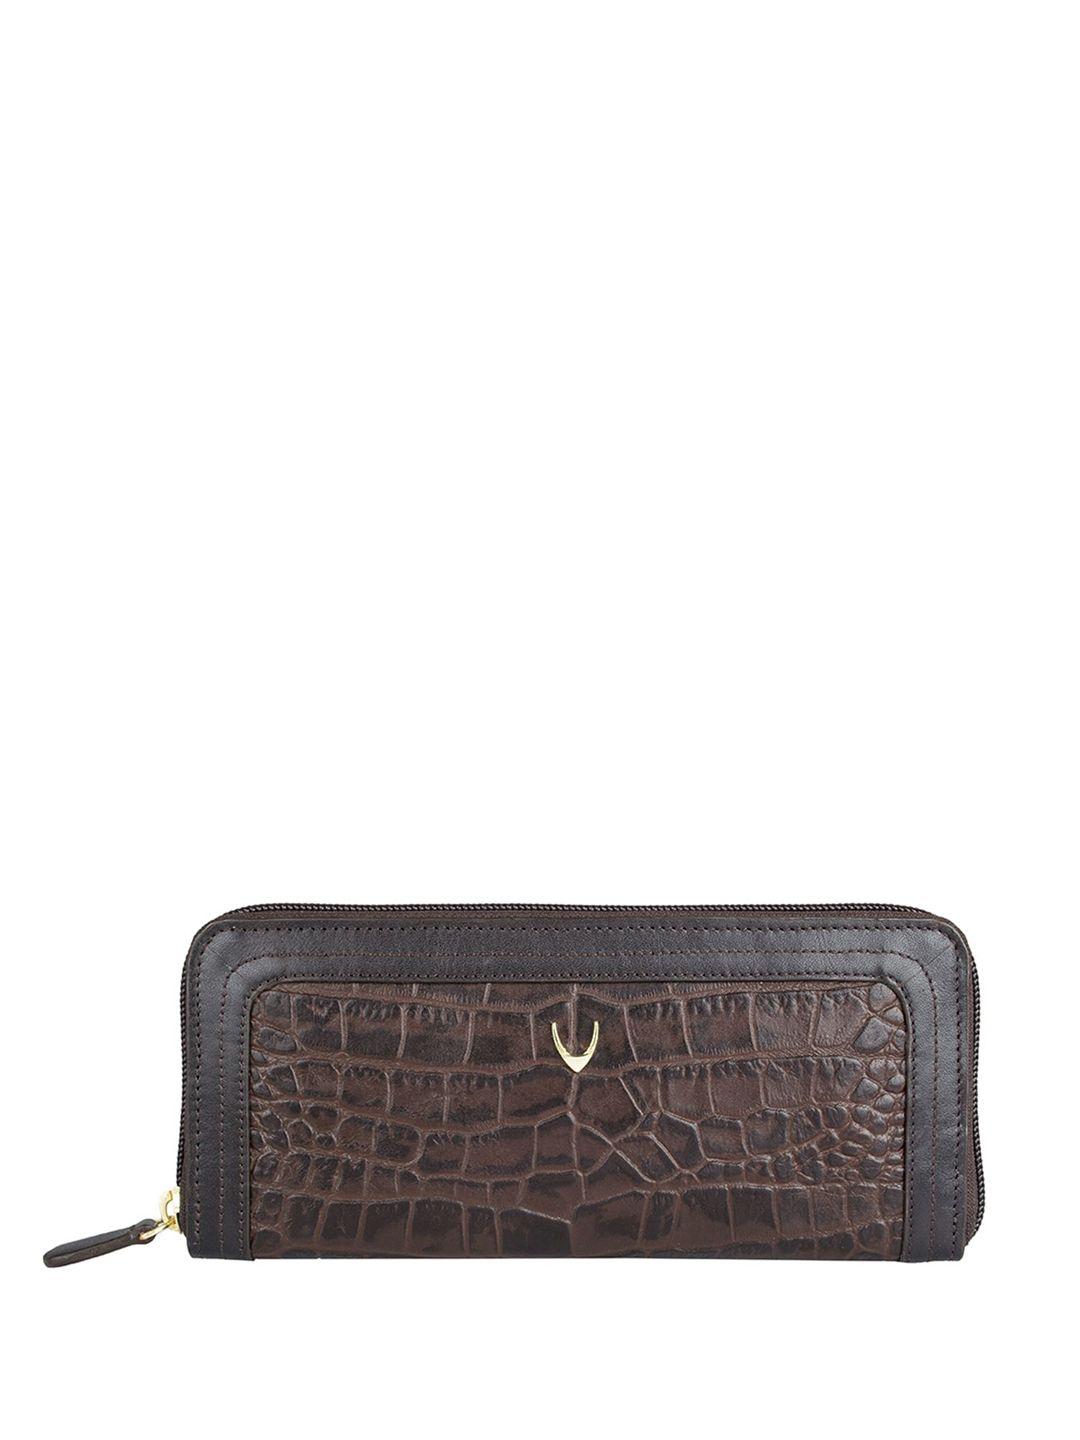 hidesign textured leather purse